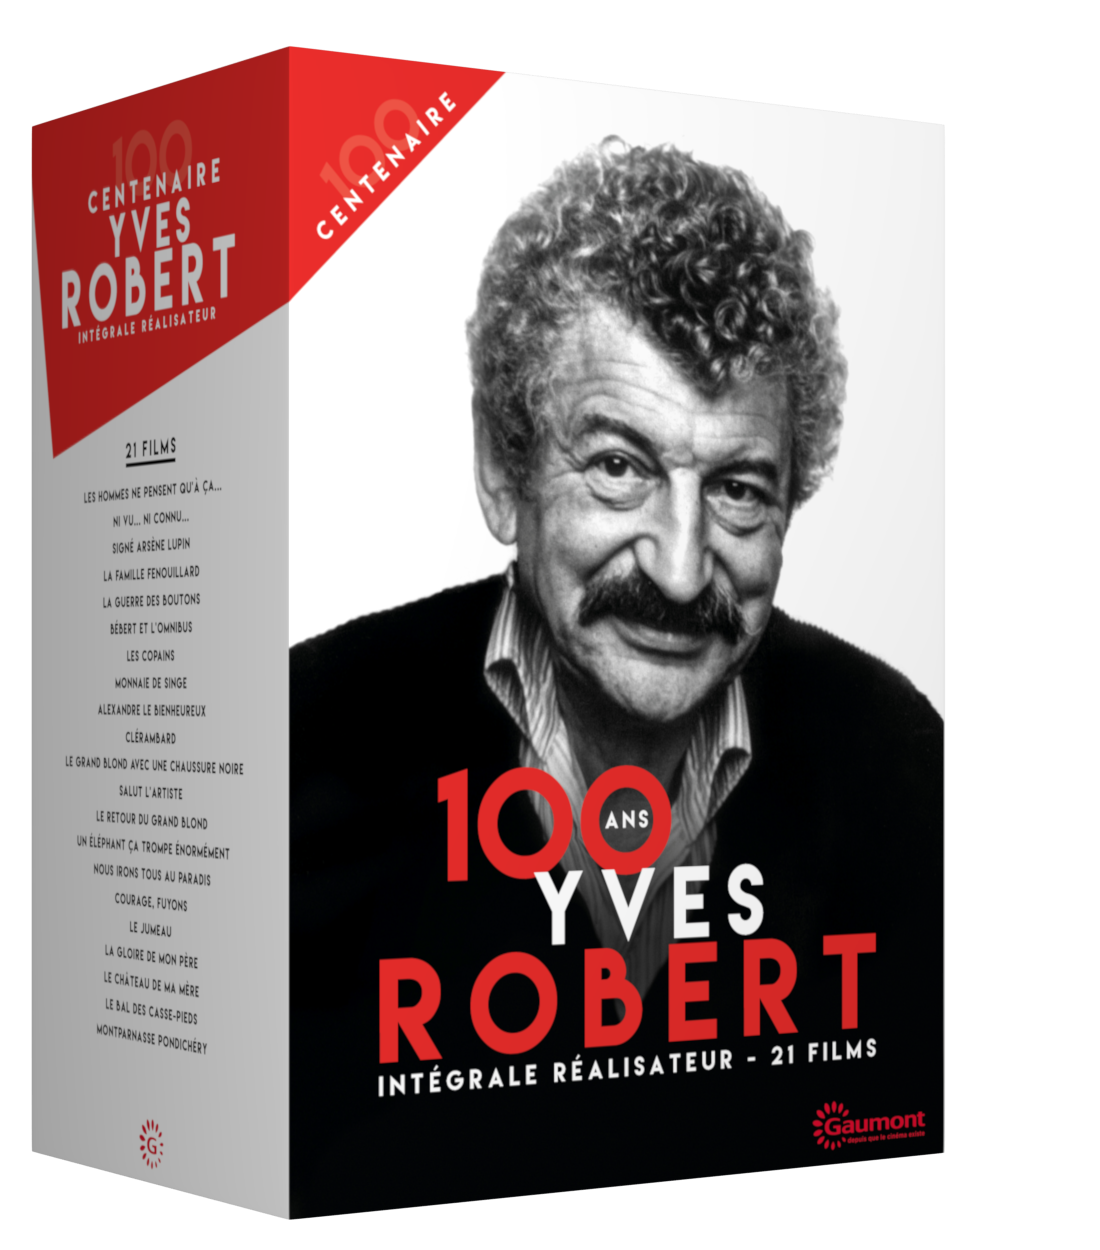 COFFRET CENTENAIRE YVES ROBERT - INTEGRALE REALISATEUR - EDITION LIMITEE NUMEROTEE - 21 DVD + 1 DVD BONUS